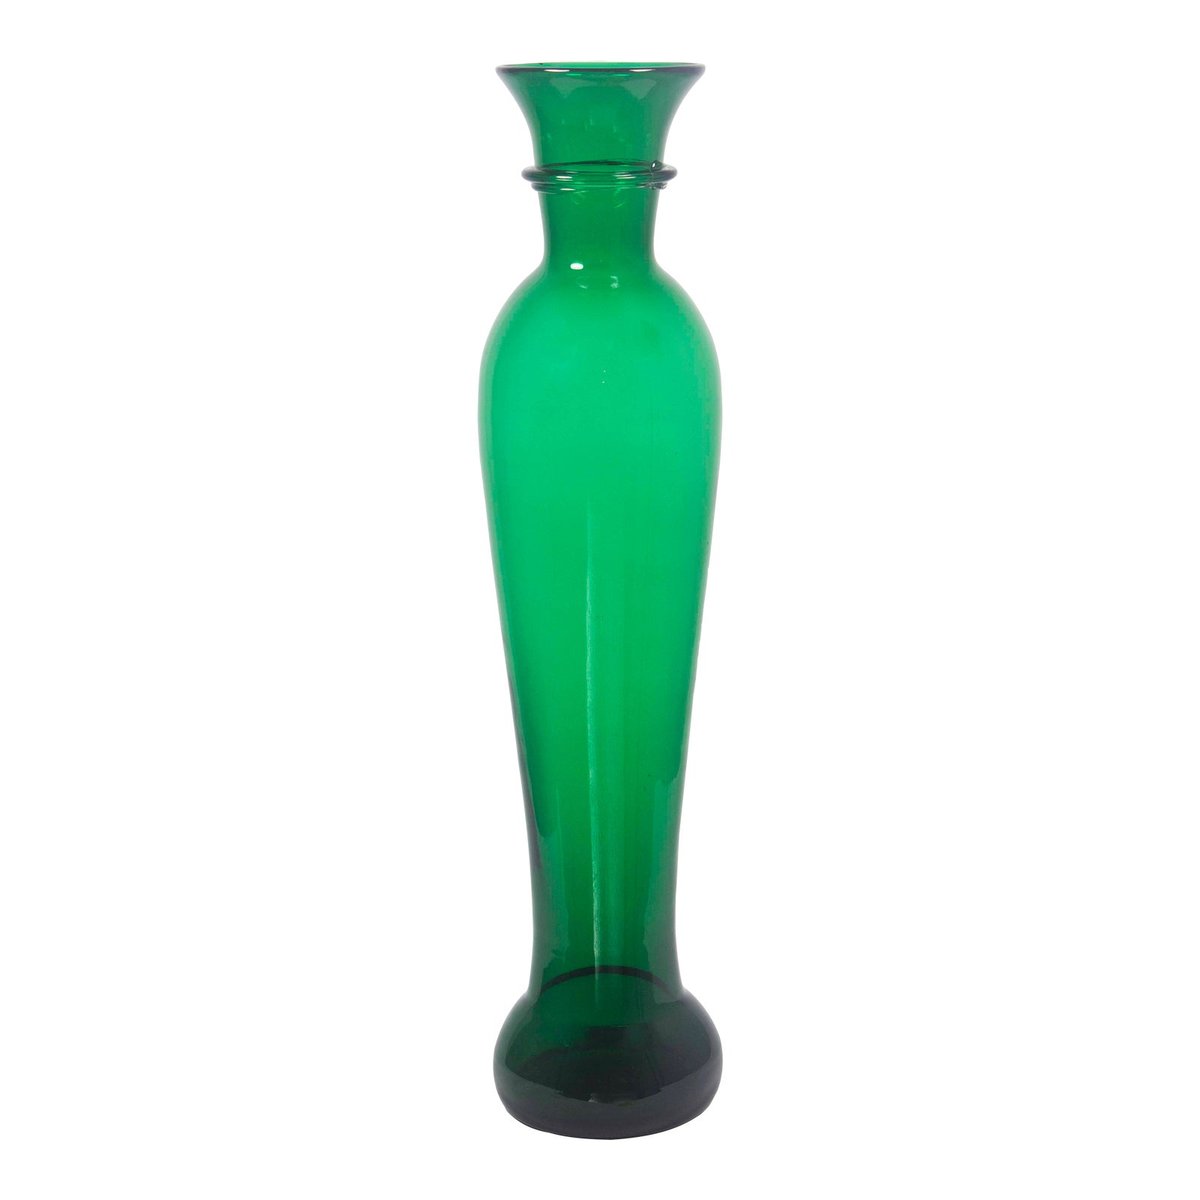 1970s Blenko Green Vase

soo.nr/ZuP7

#debrisdallas #debrisantiques #antiquestoredallas #blenko #artglassvase #midcenturydallas #dallasantiques #dallasdesigndistrict #interiordesign #newyorkinteriors #houstoninteriors #chairish